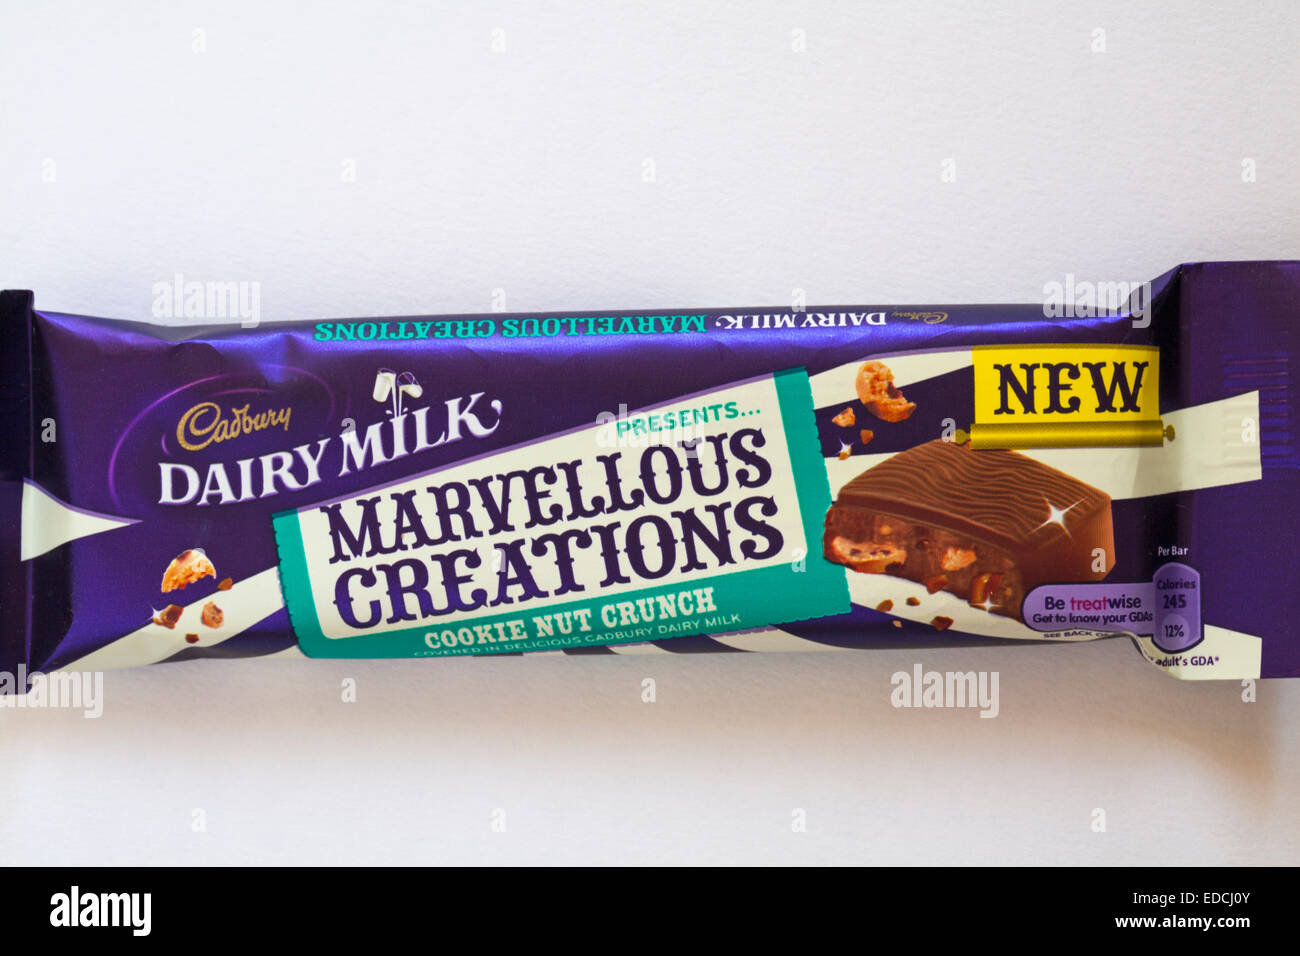 Cadbury Dairy Milk presents Marvellous Creations - cookie nut crunch chocolate bar set on white background Stock Photo